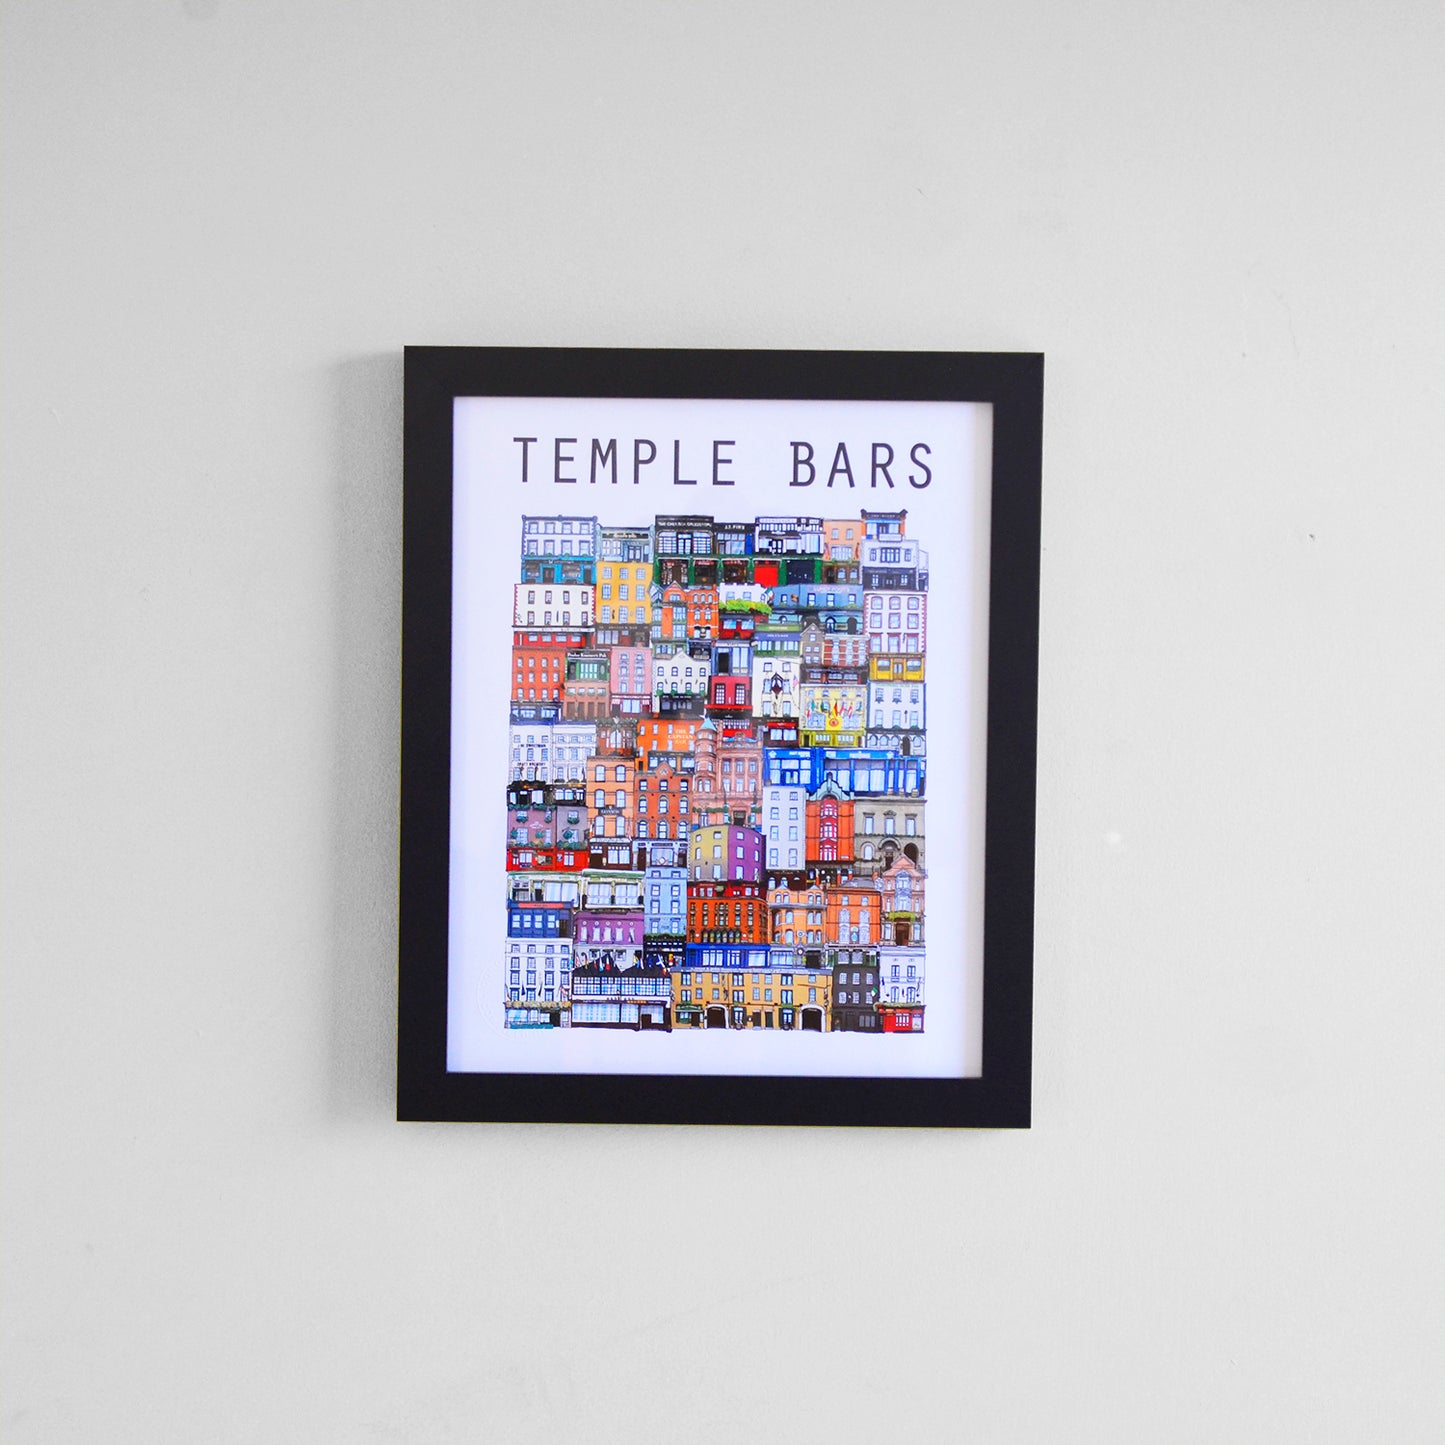 8x10 inch Framed Temple Bars